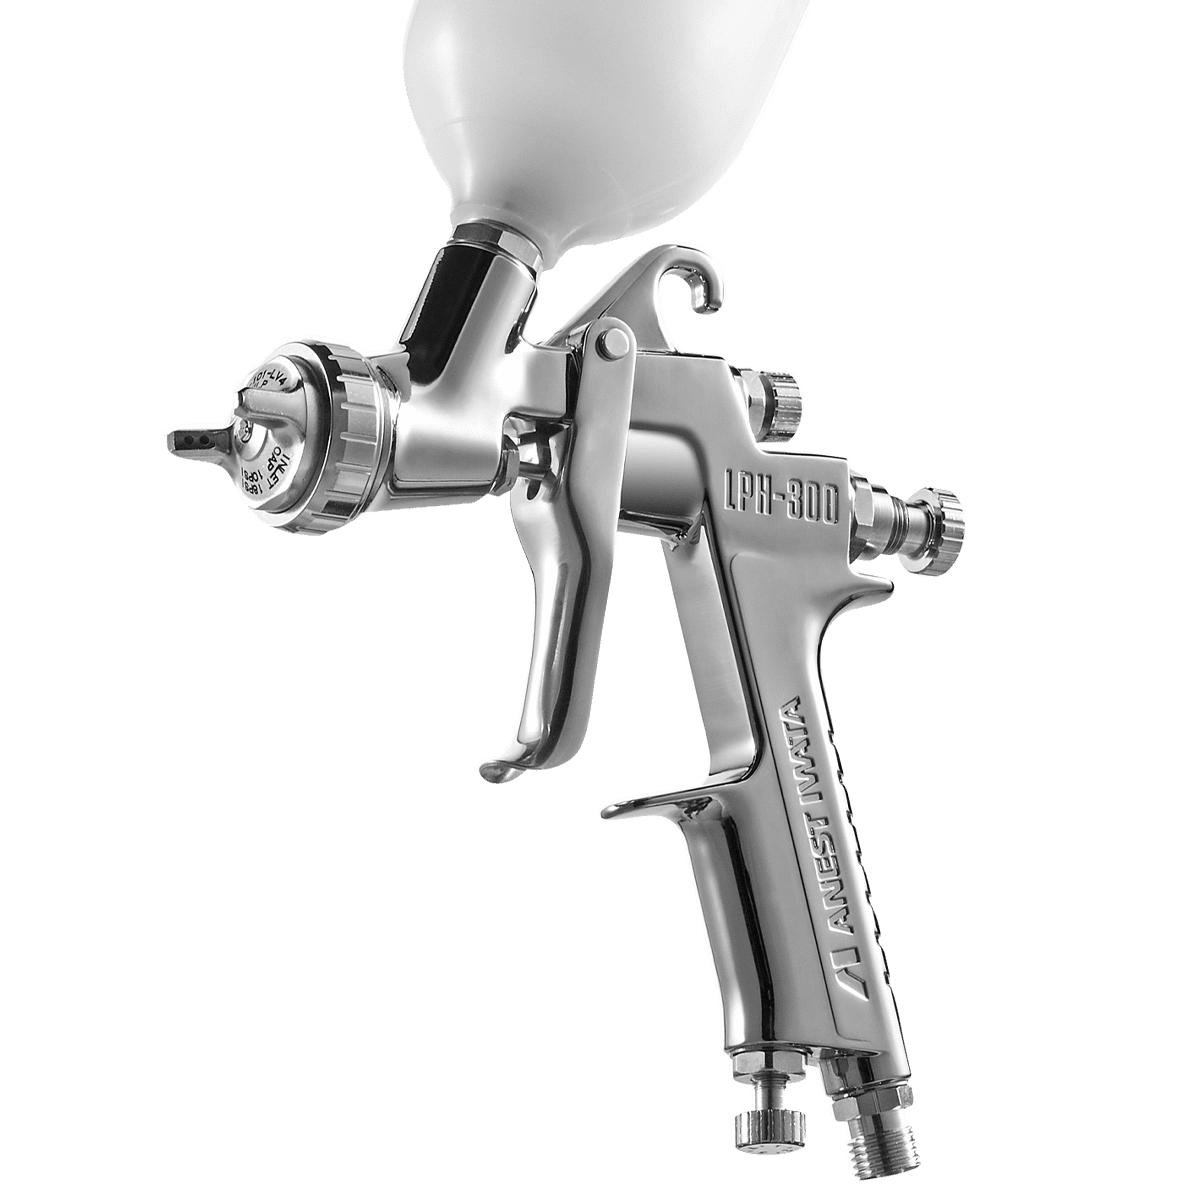 LPH-300 Manual Spray Gun for coating | Anest Iwata